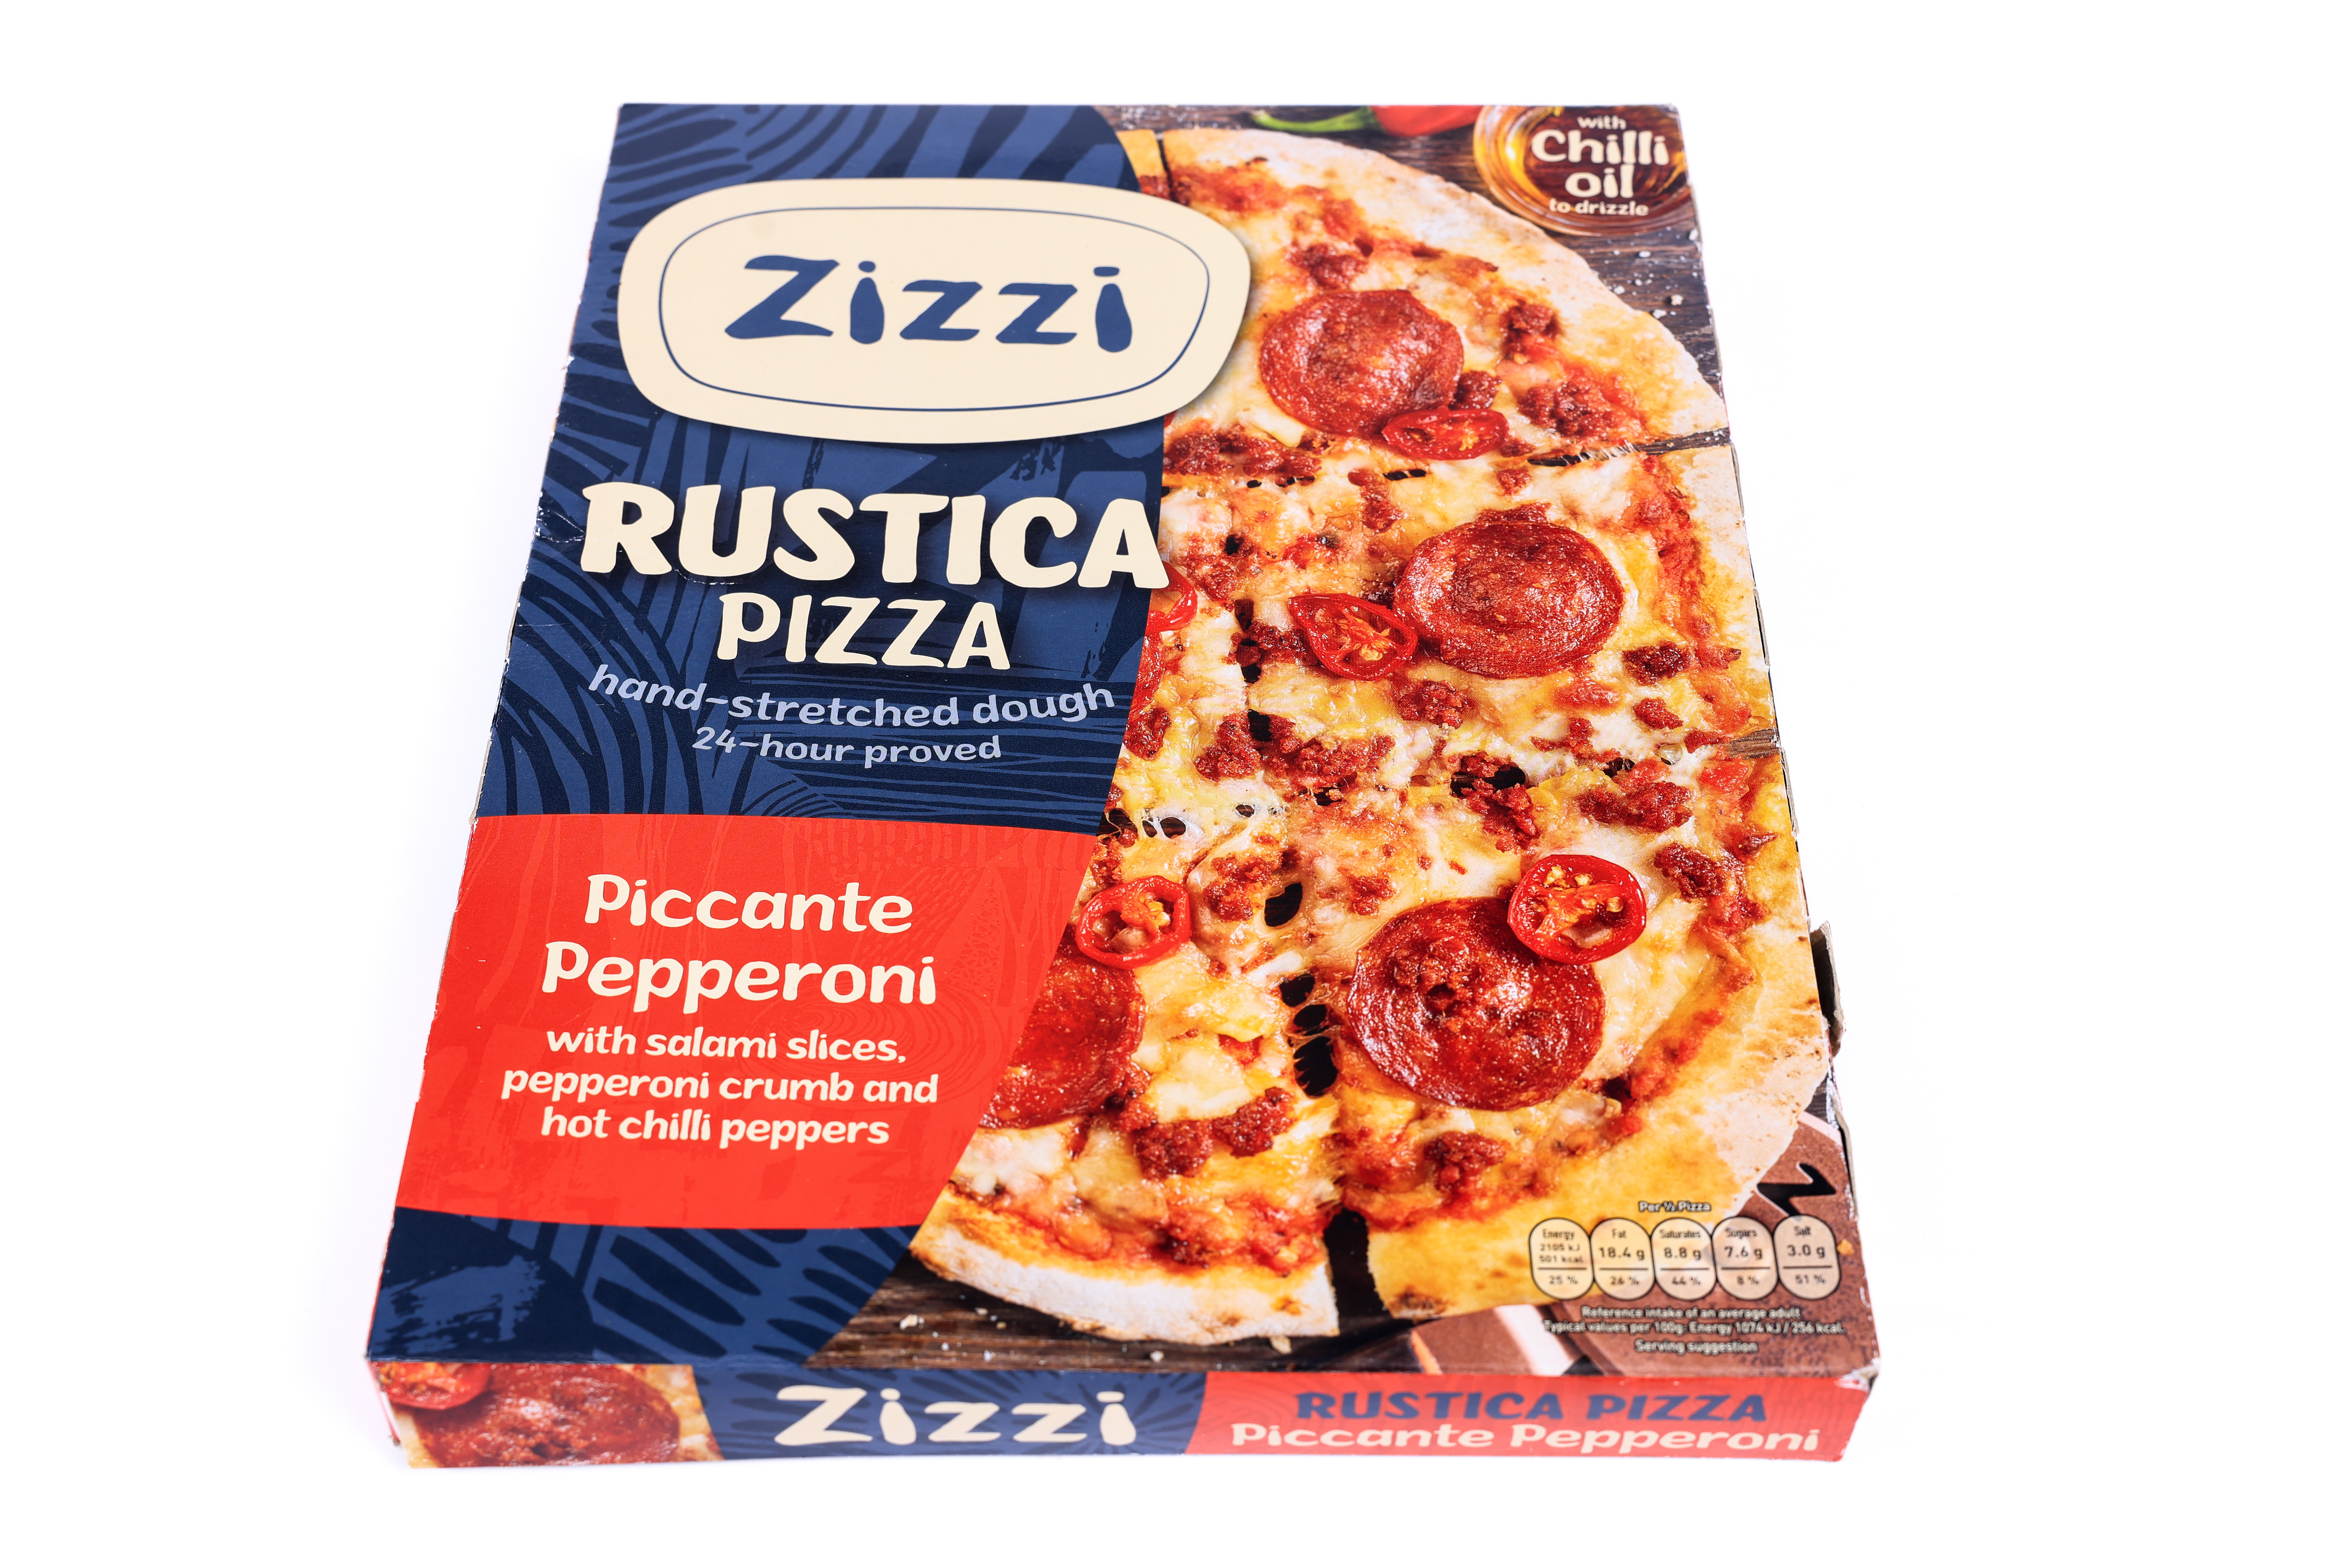 Zizzis Rustica Piccante Pepperoni Pizza kostet bei Morrisons 4,25 £